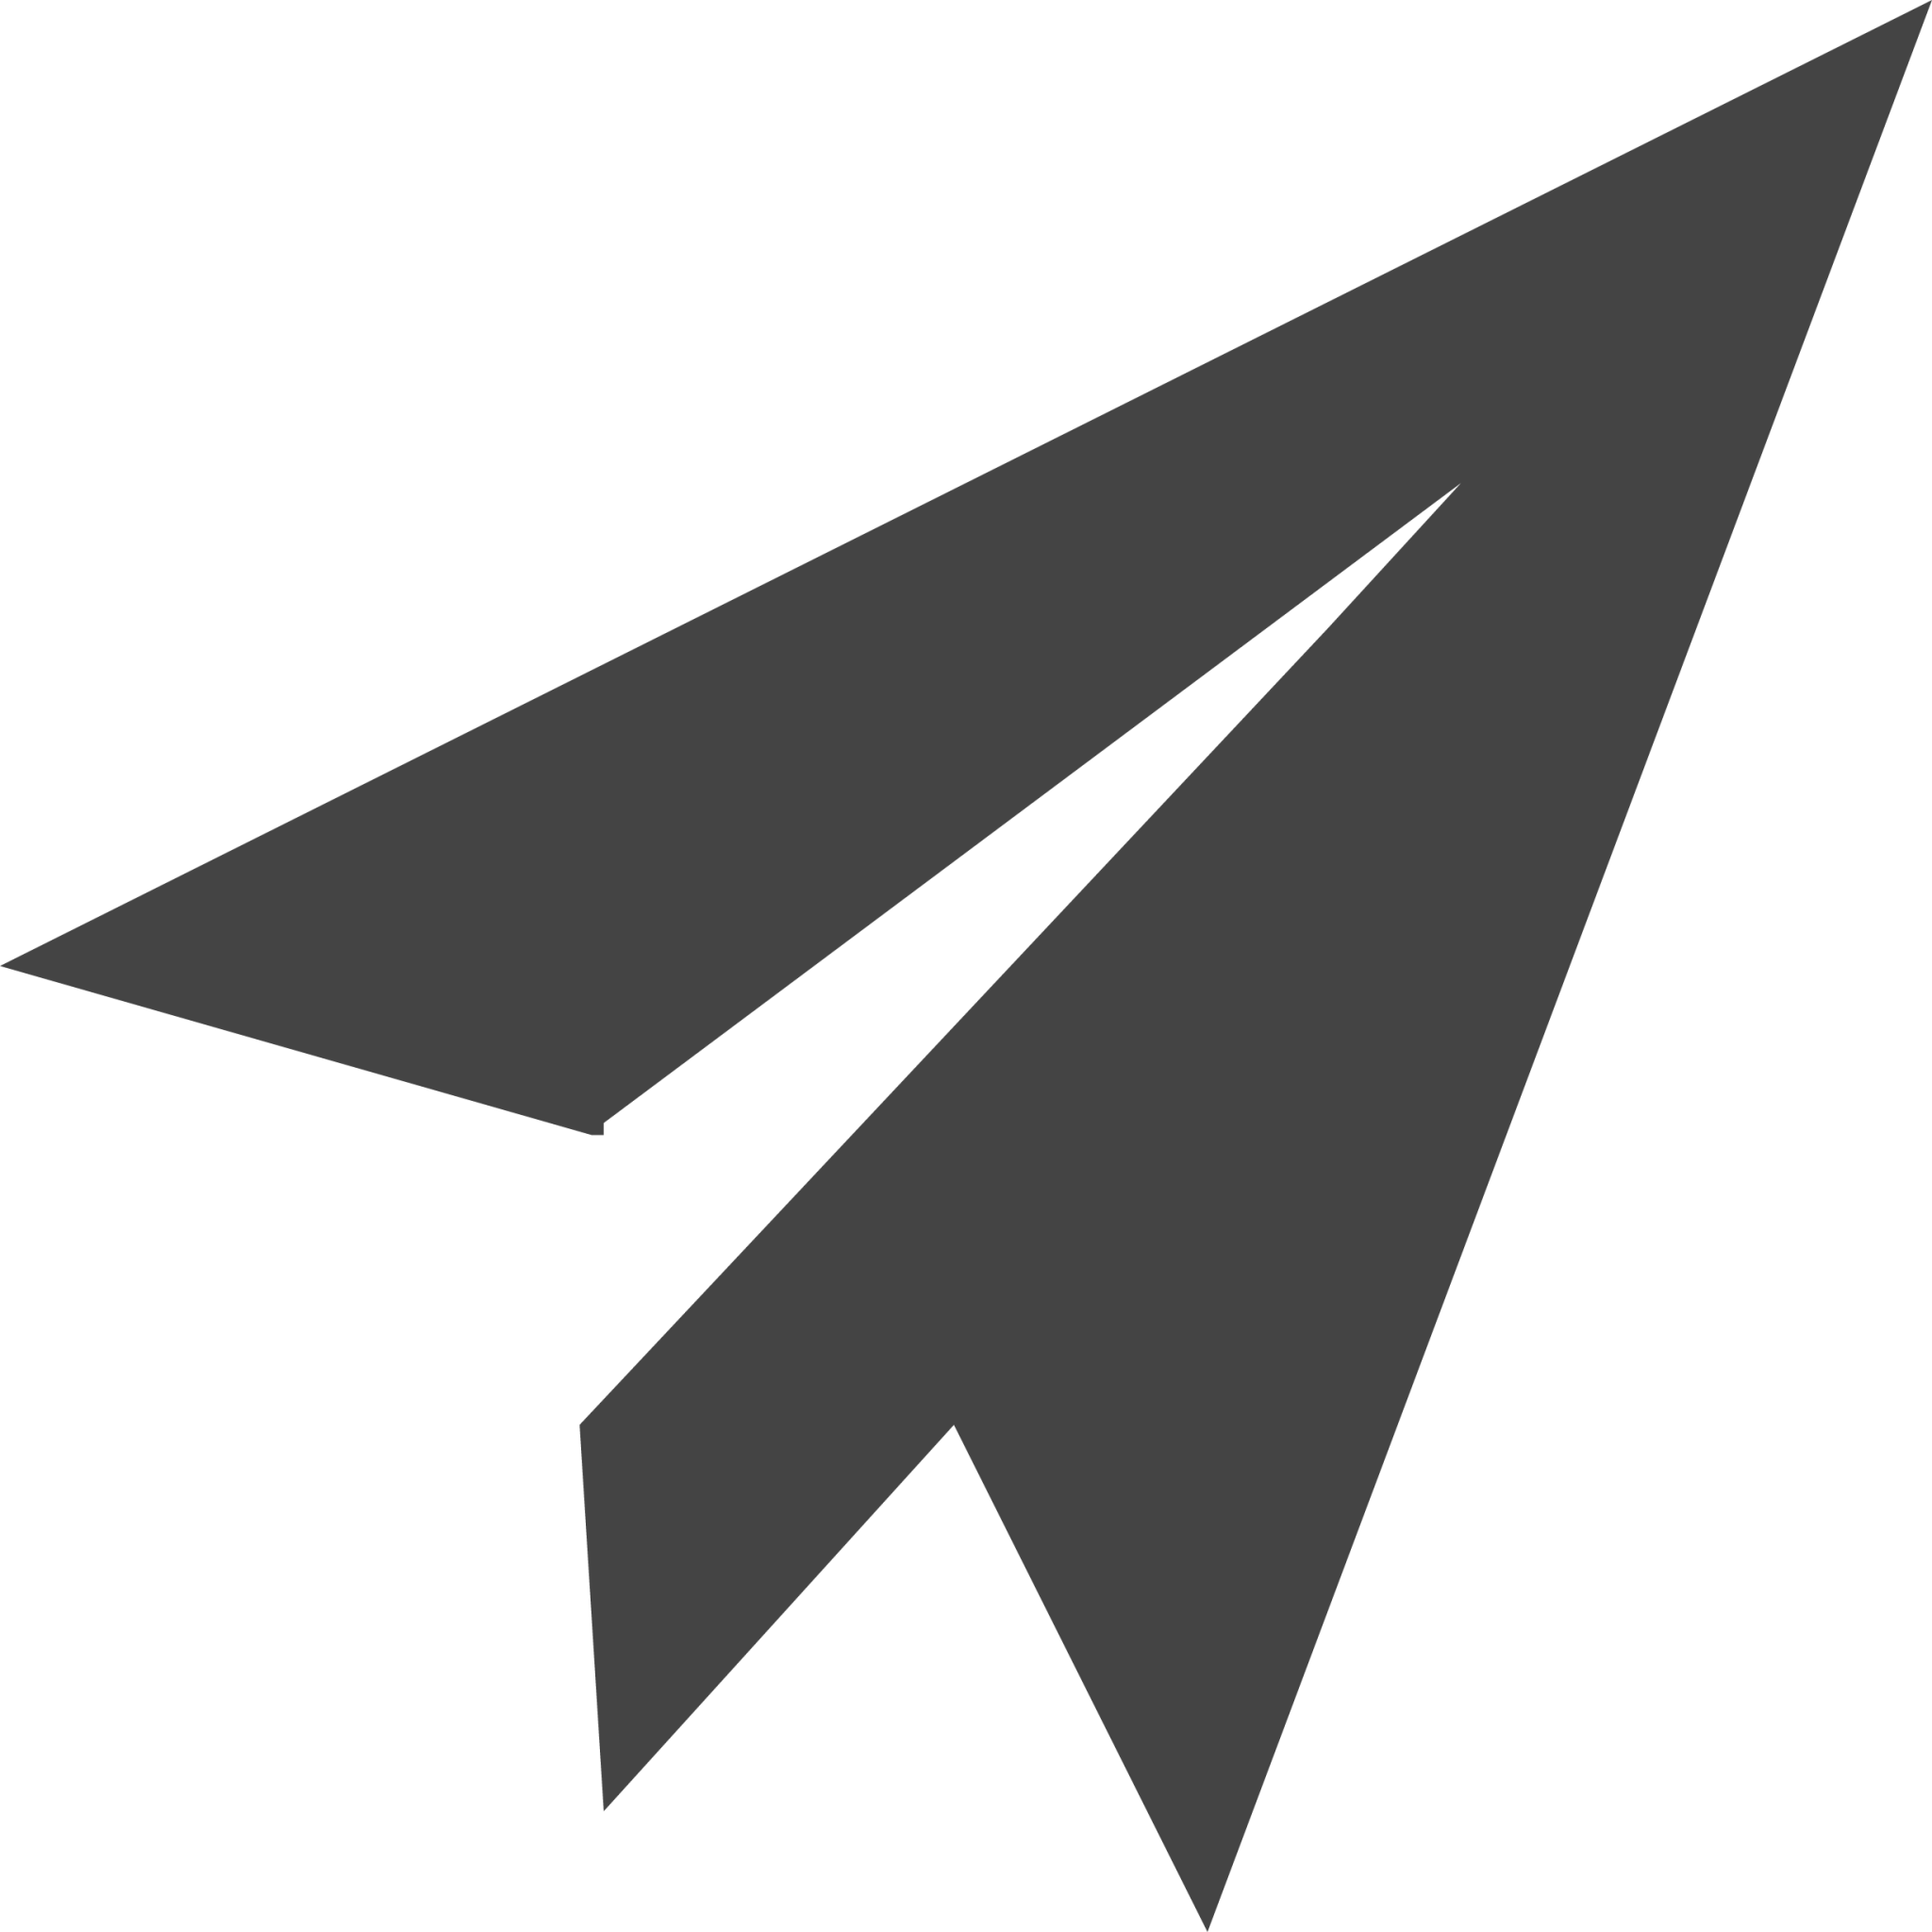 paperplane icon